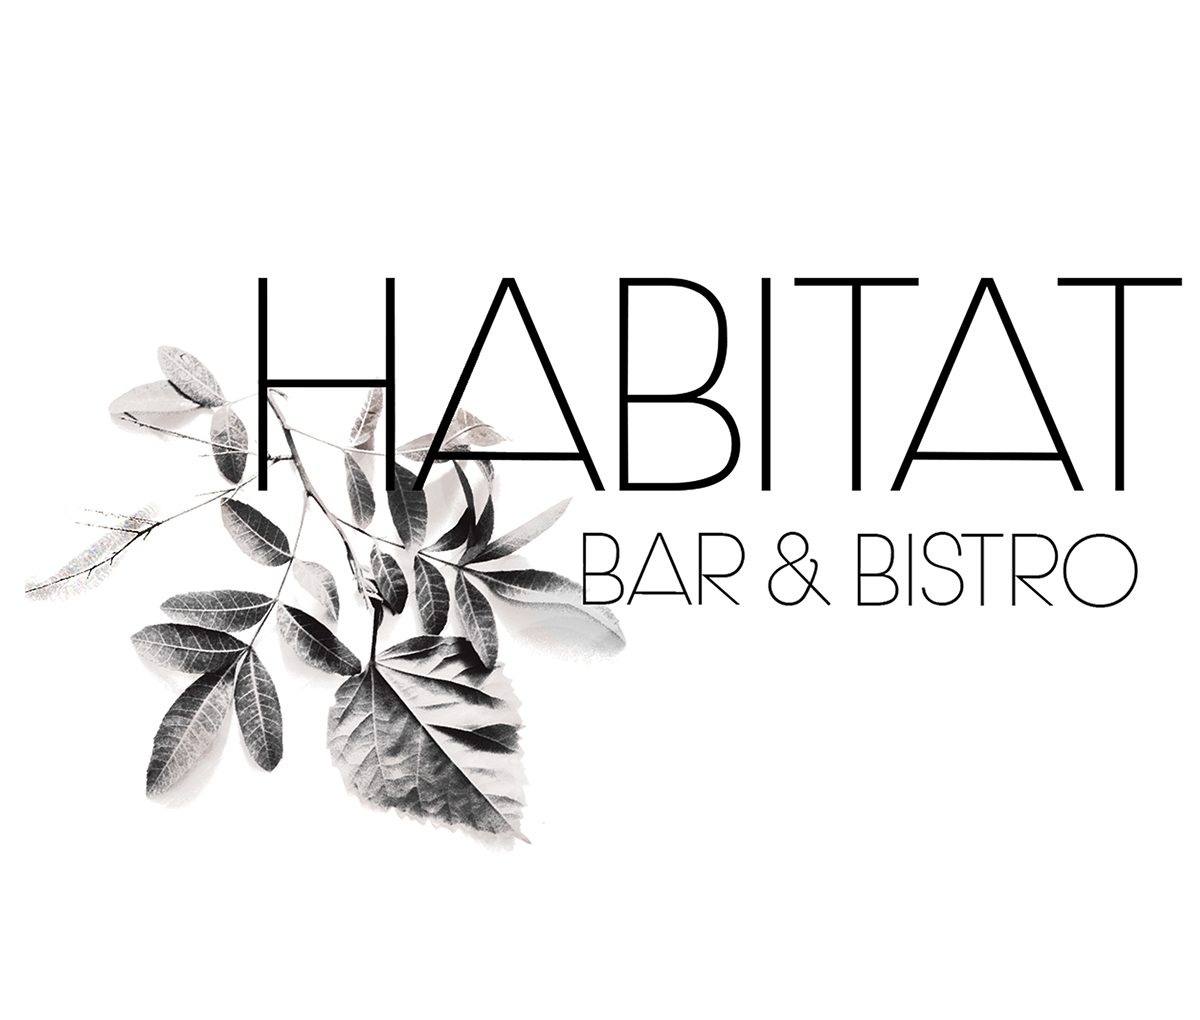 bar habitat plants